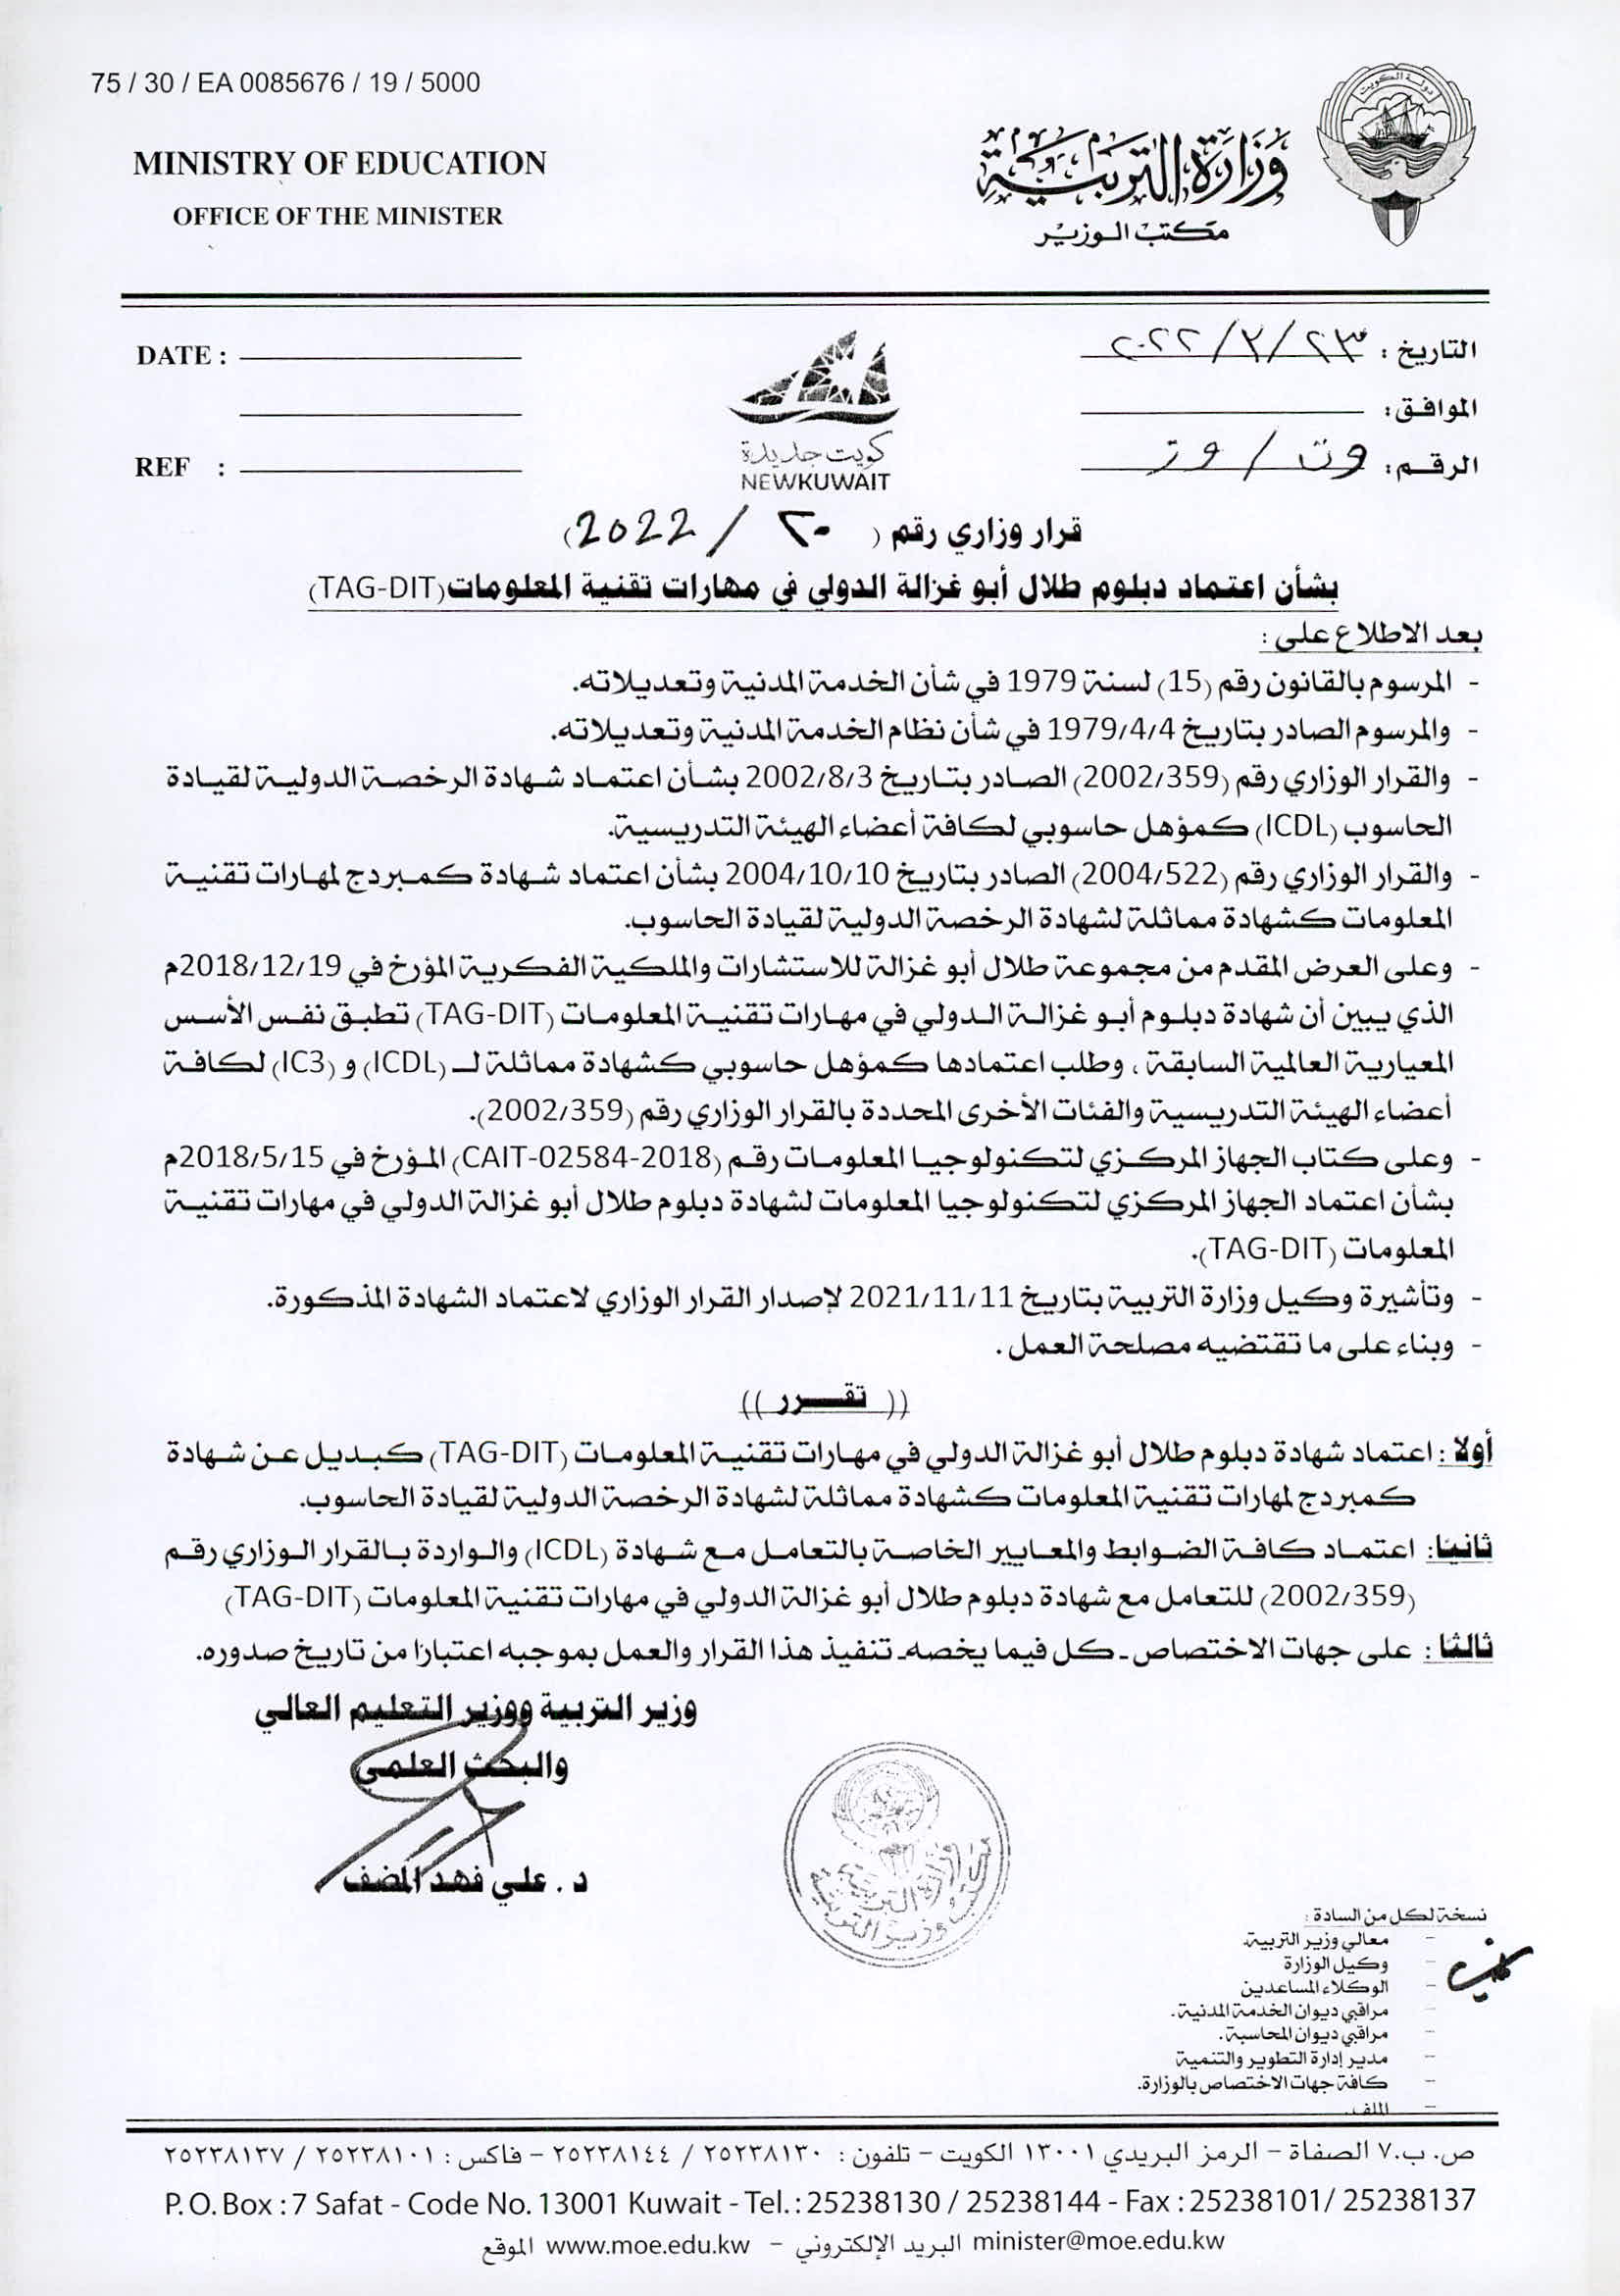 Kuwait’s Ministry of Education Accredits ‘Abu-Ghazaleh International Diploma in Teachers’ IT Skills’ Certificate